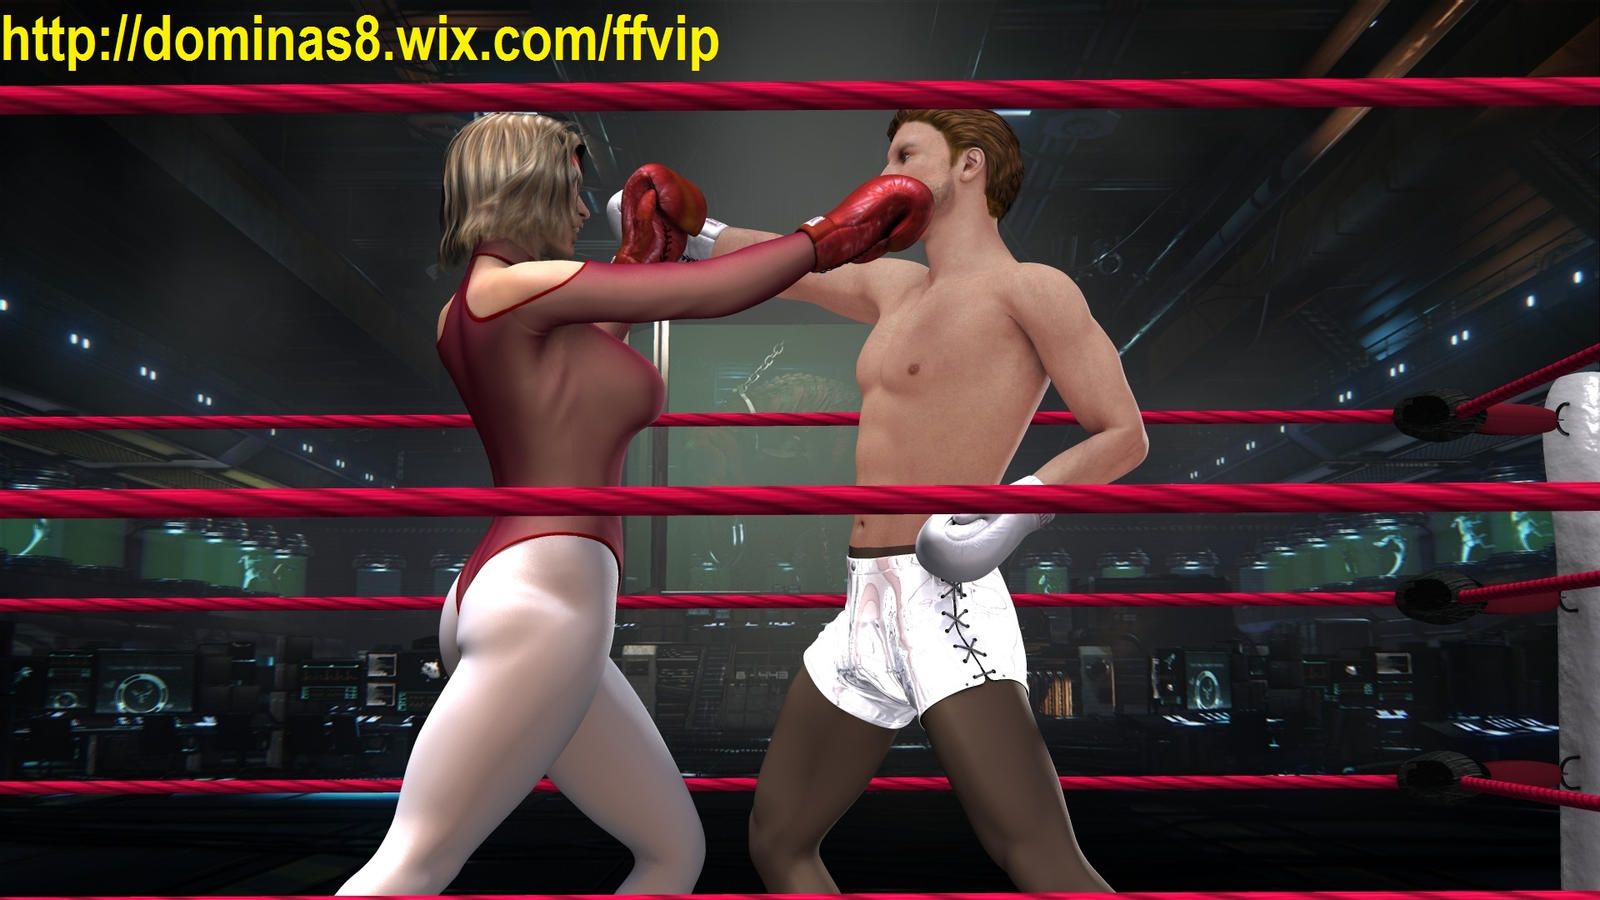 Animated boxing